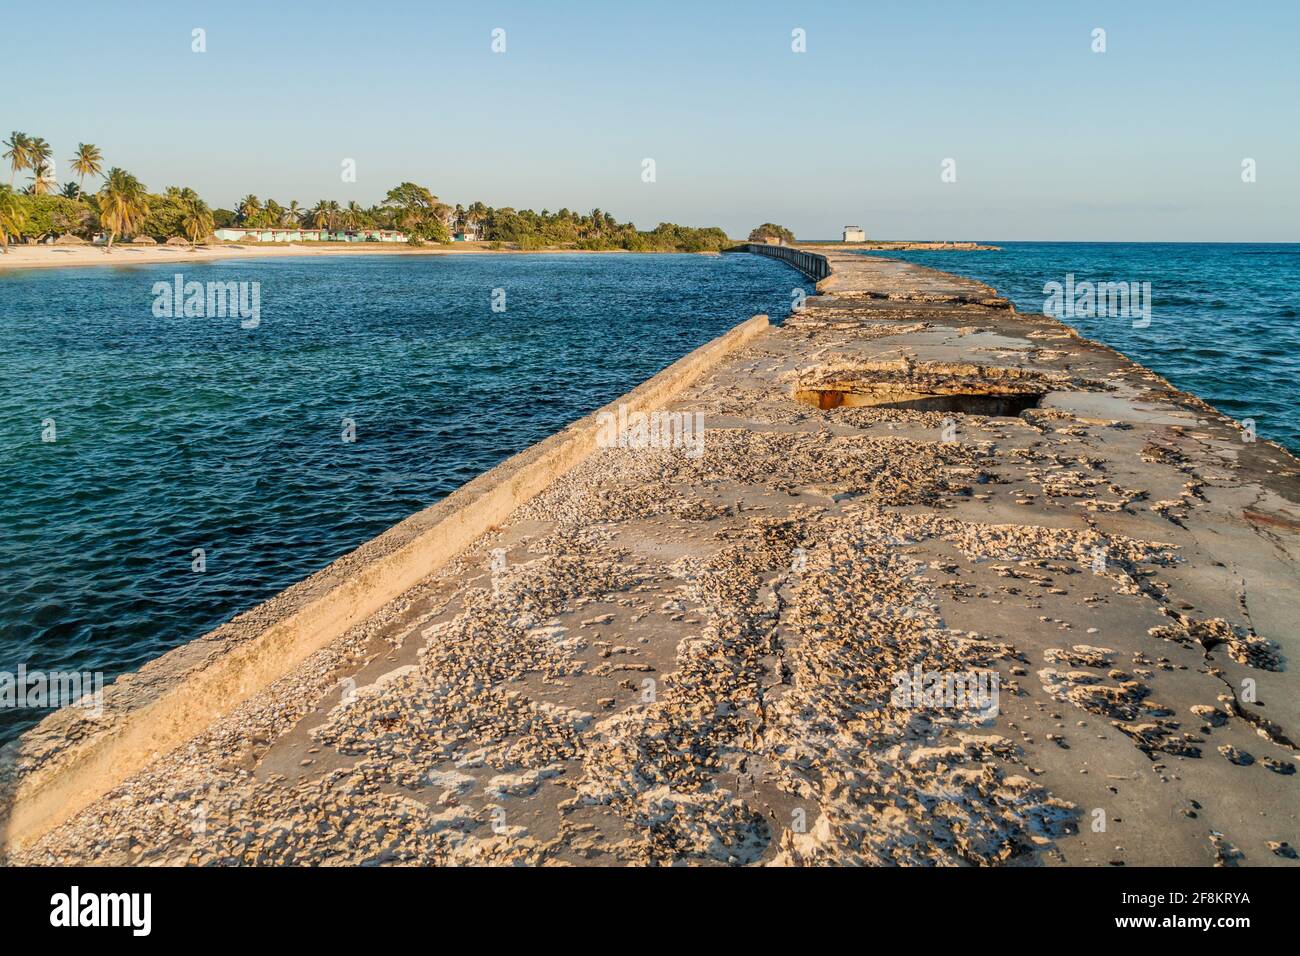 Wave breaker of a beach in Playa Giron village, Cuba. Stock Photo